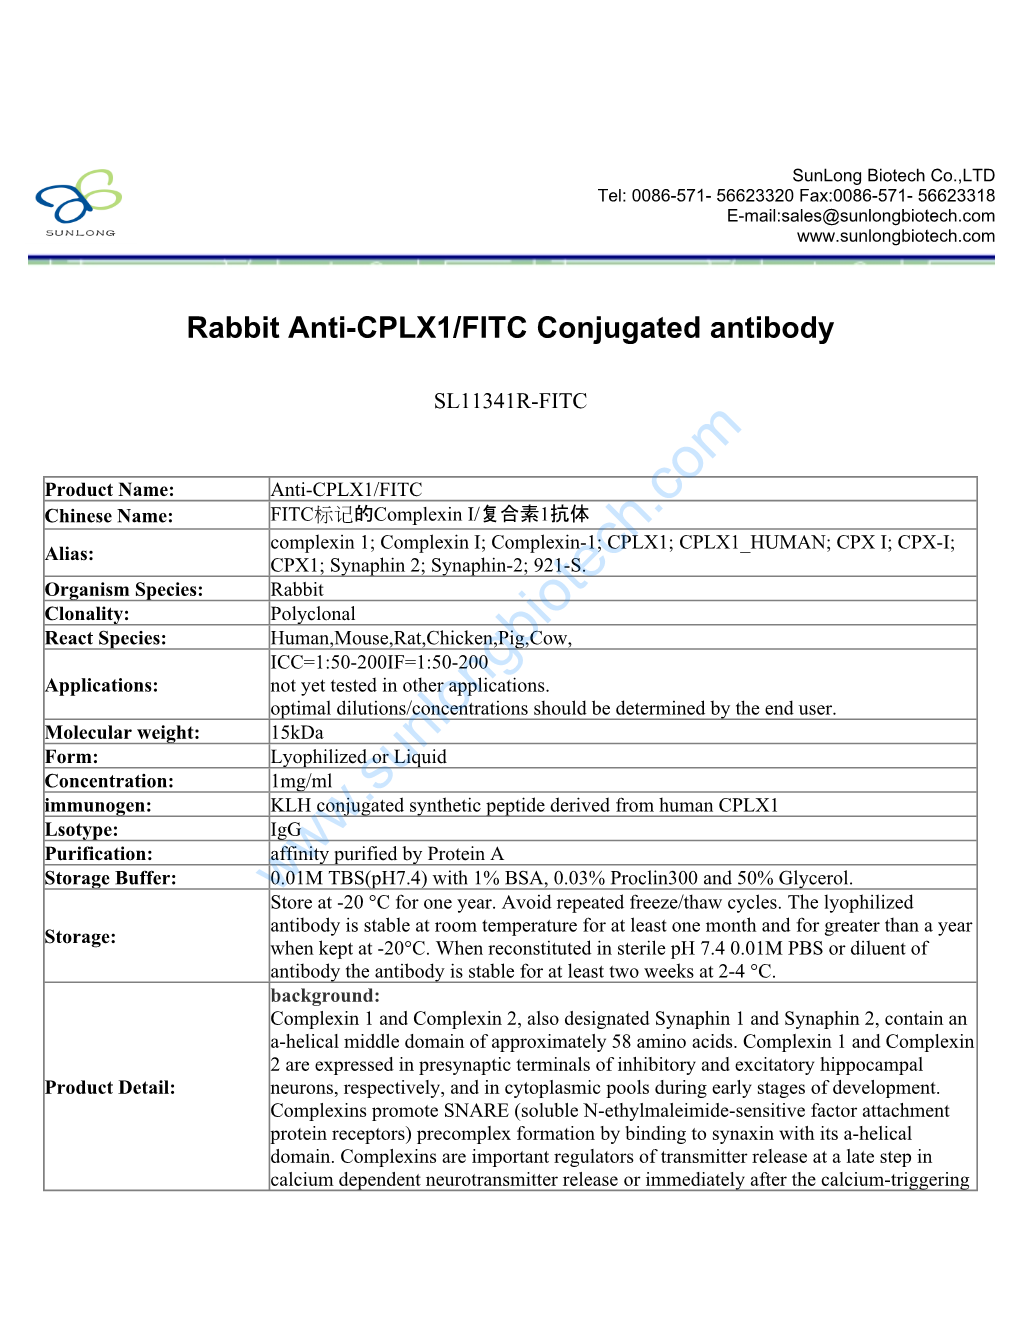 Rabbit Anti-CPLX1/FITC Conjugated Antibody-SL11341R-FITC